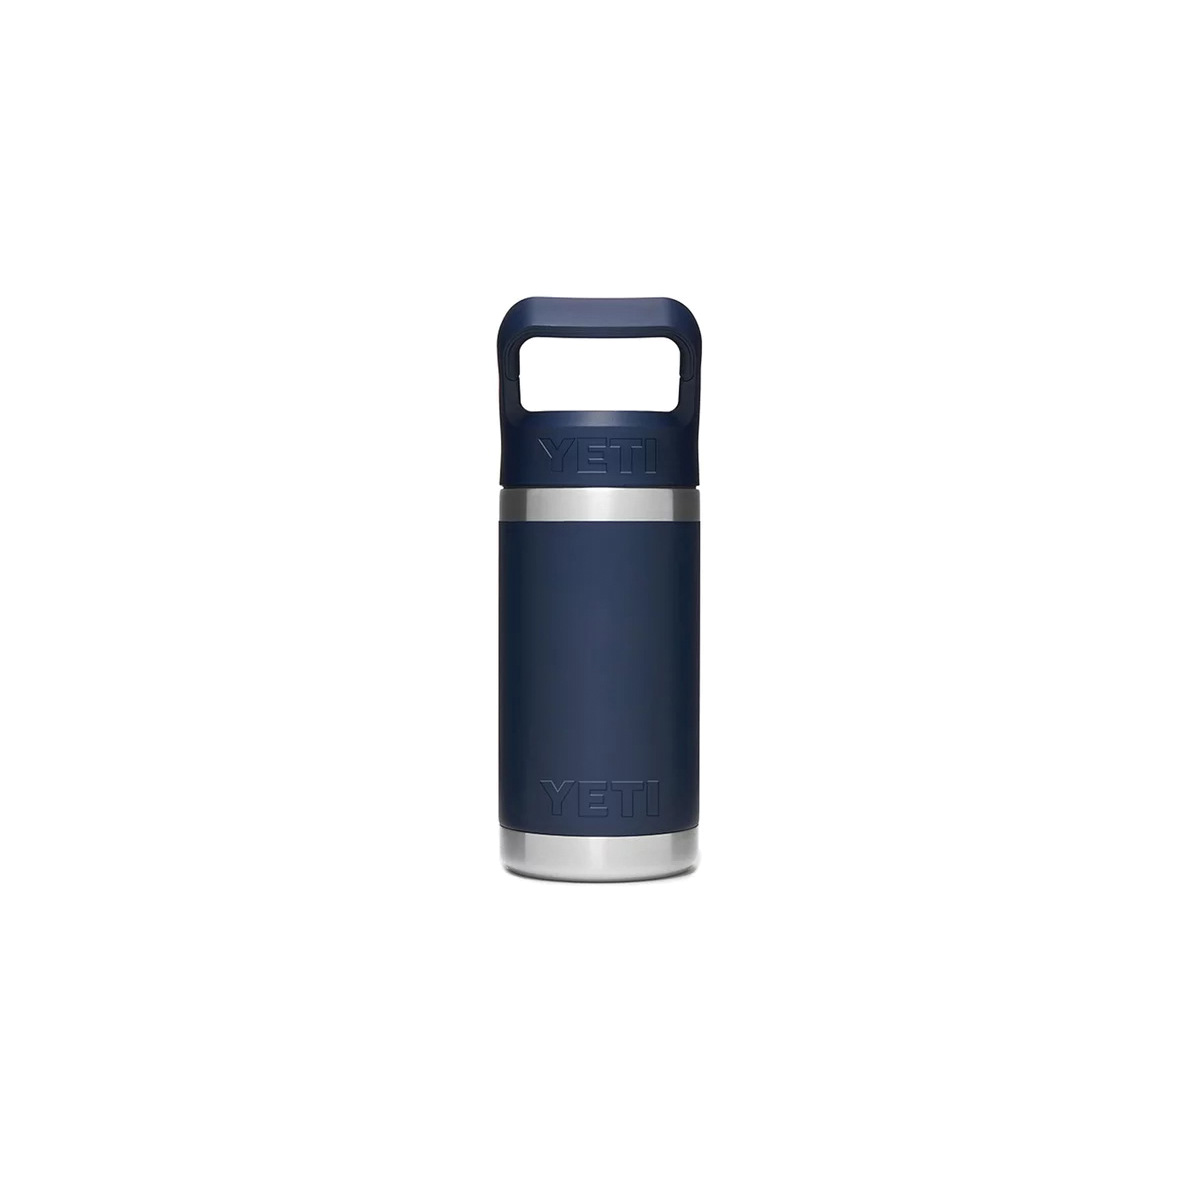 Yeti Rambler Jr 21071500110 Jr. Kid's Water Bottle, 12 oz Capacity, Stainless Steel, Navy - 4